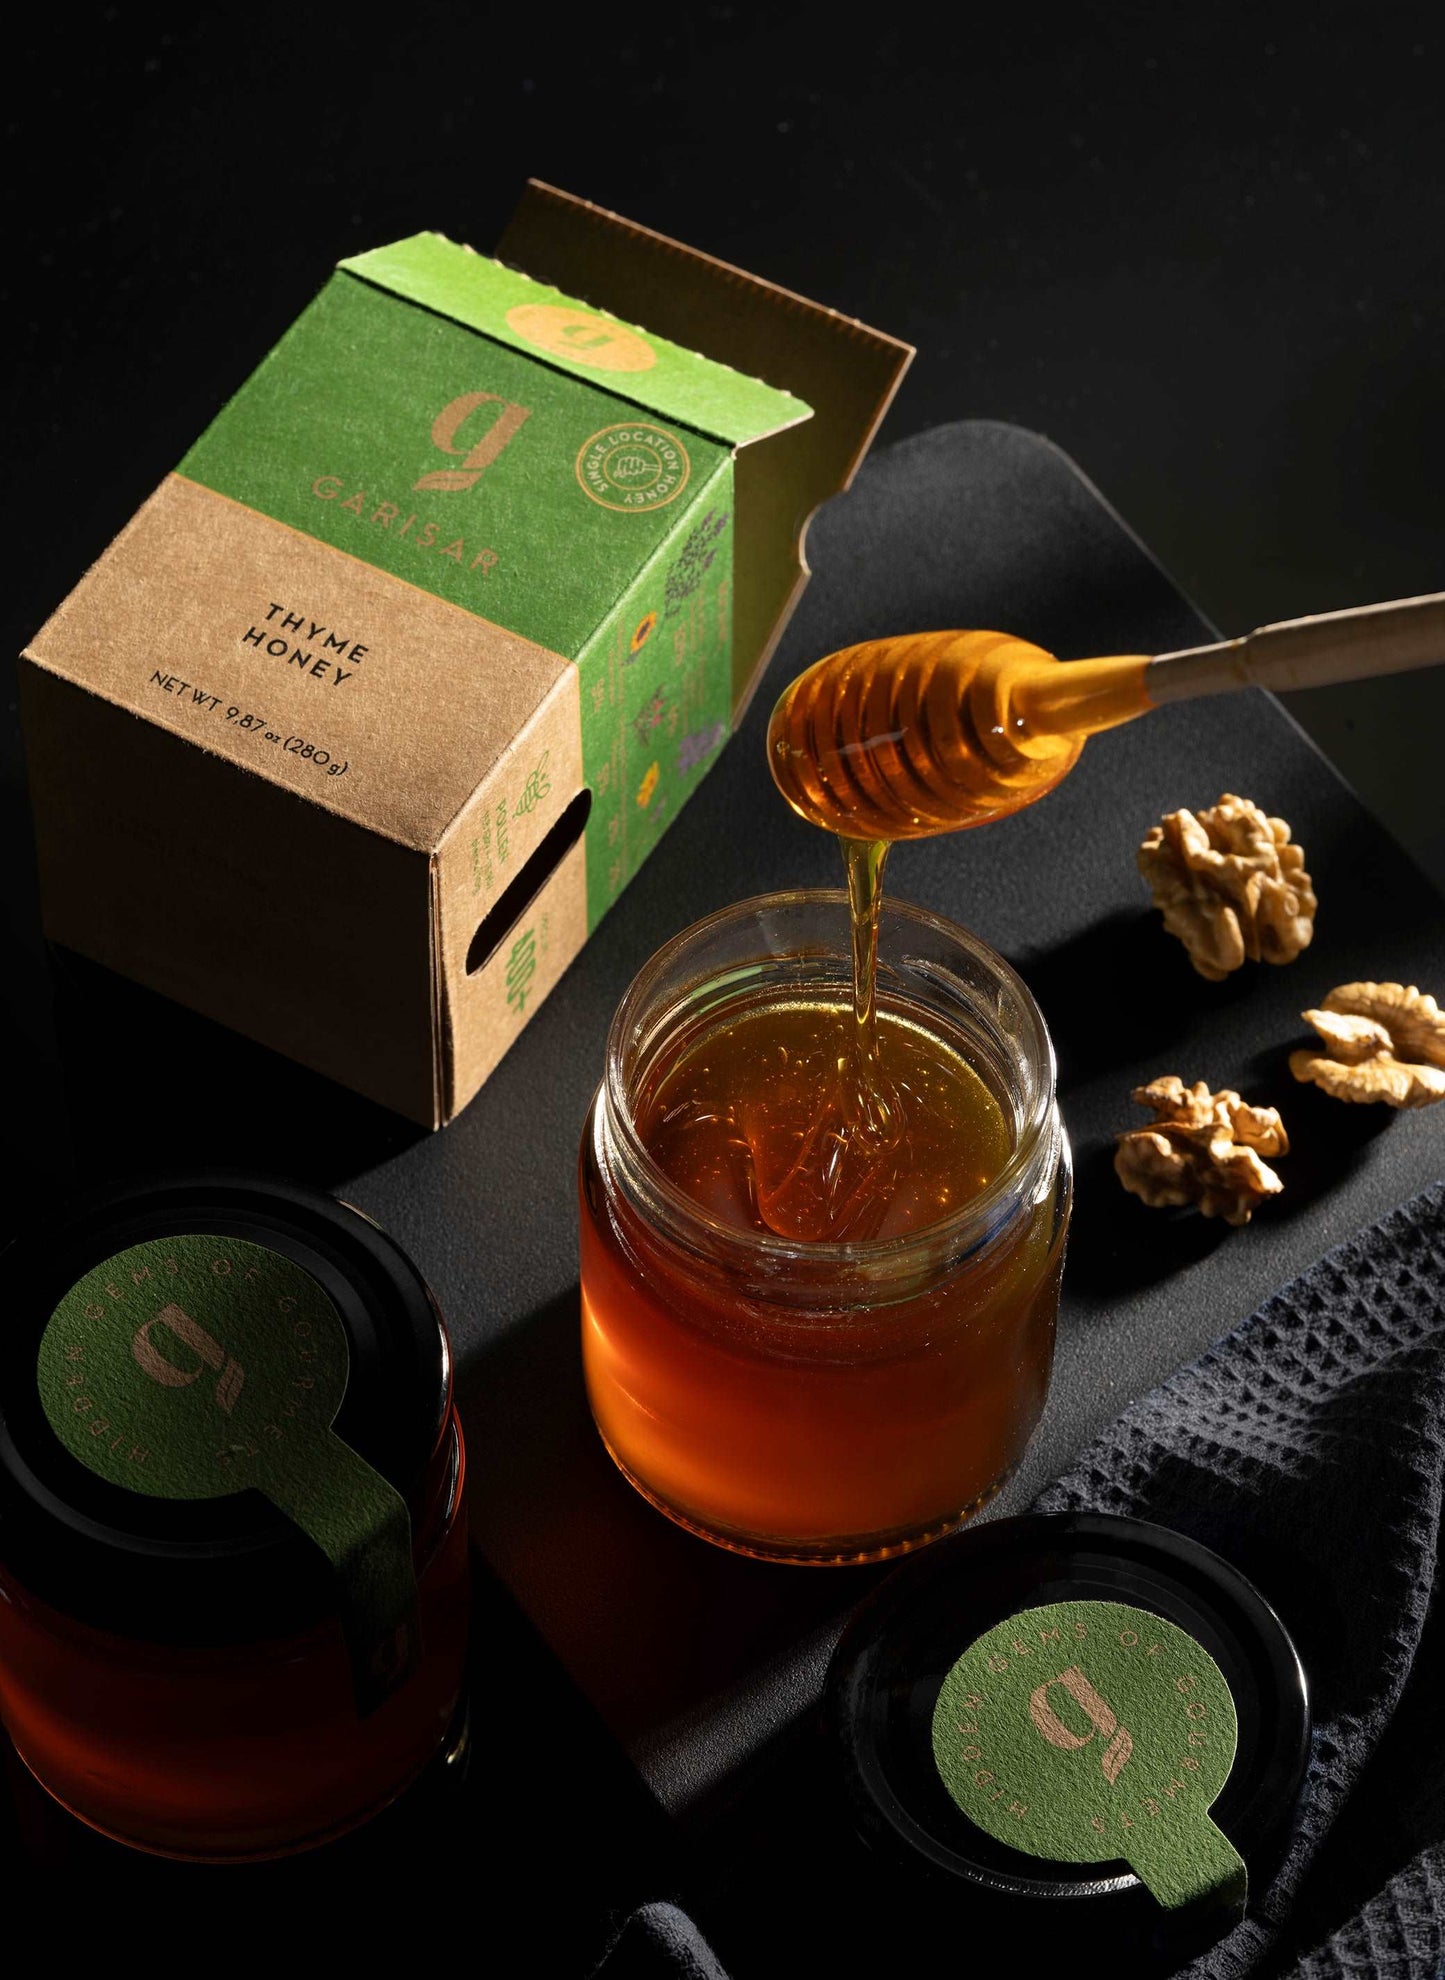 Garisar Thyme Honey